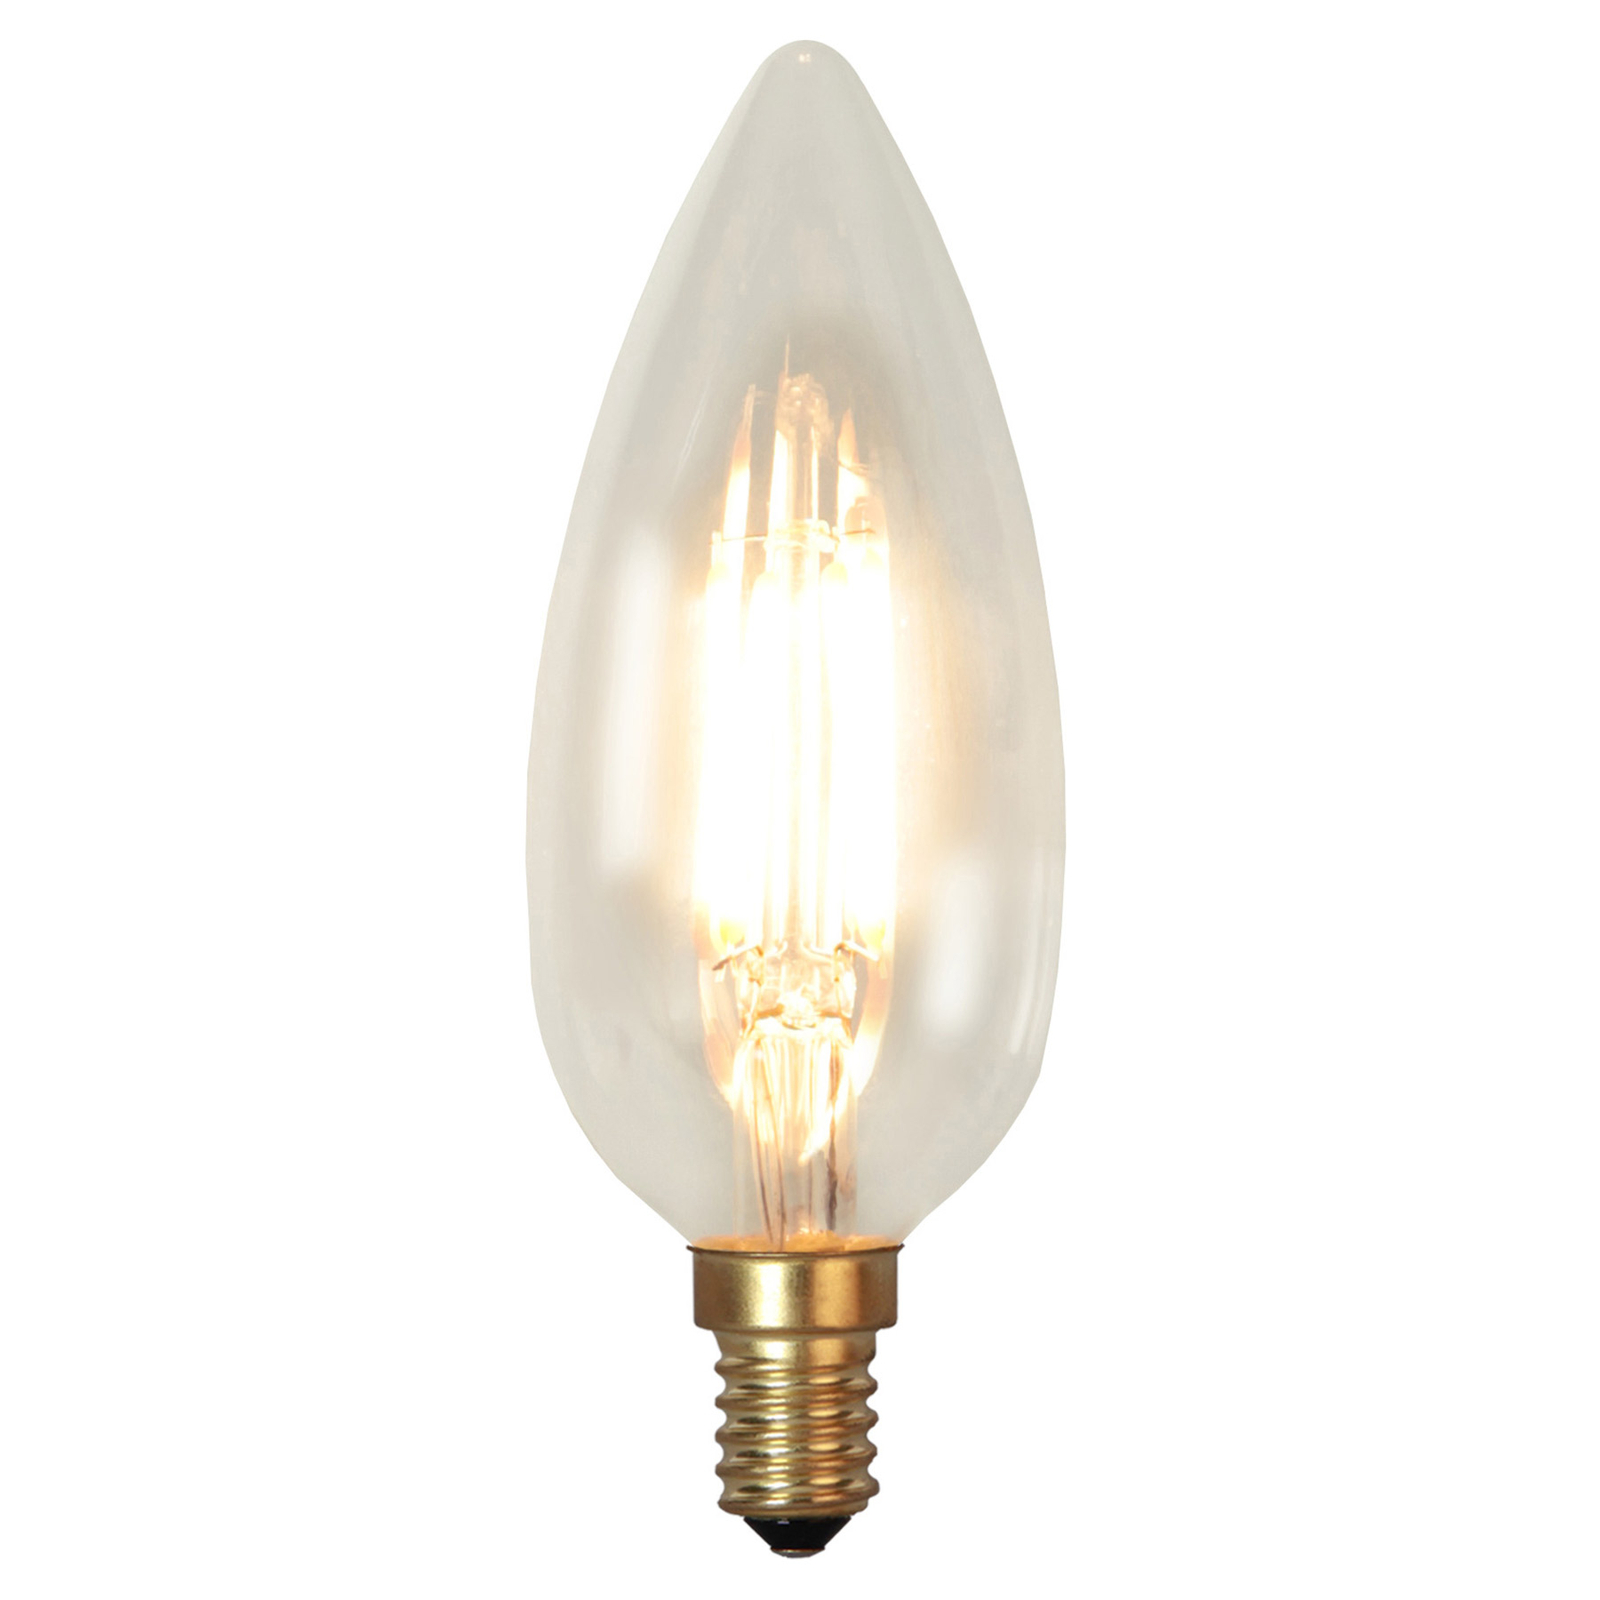 Candle LED bulb C45 E14 3W 2200K 260 lumens dim